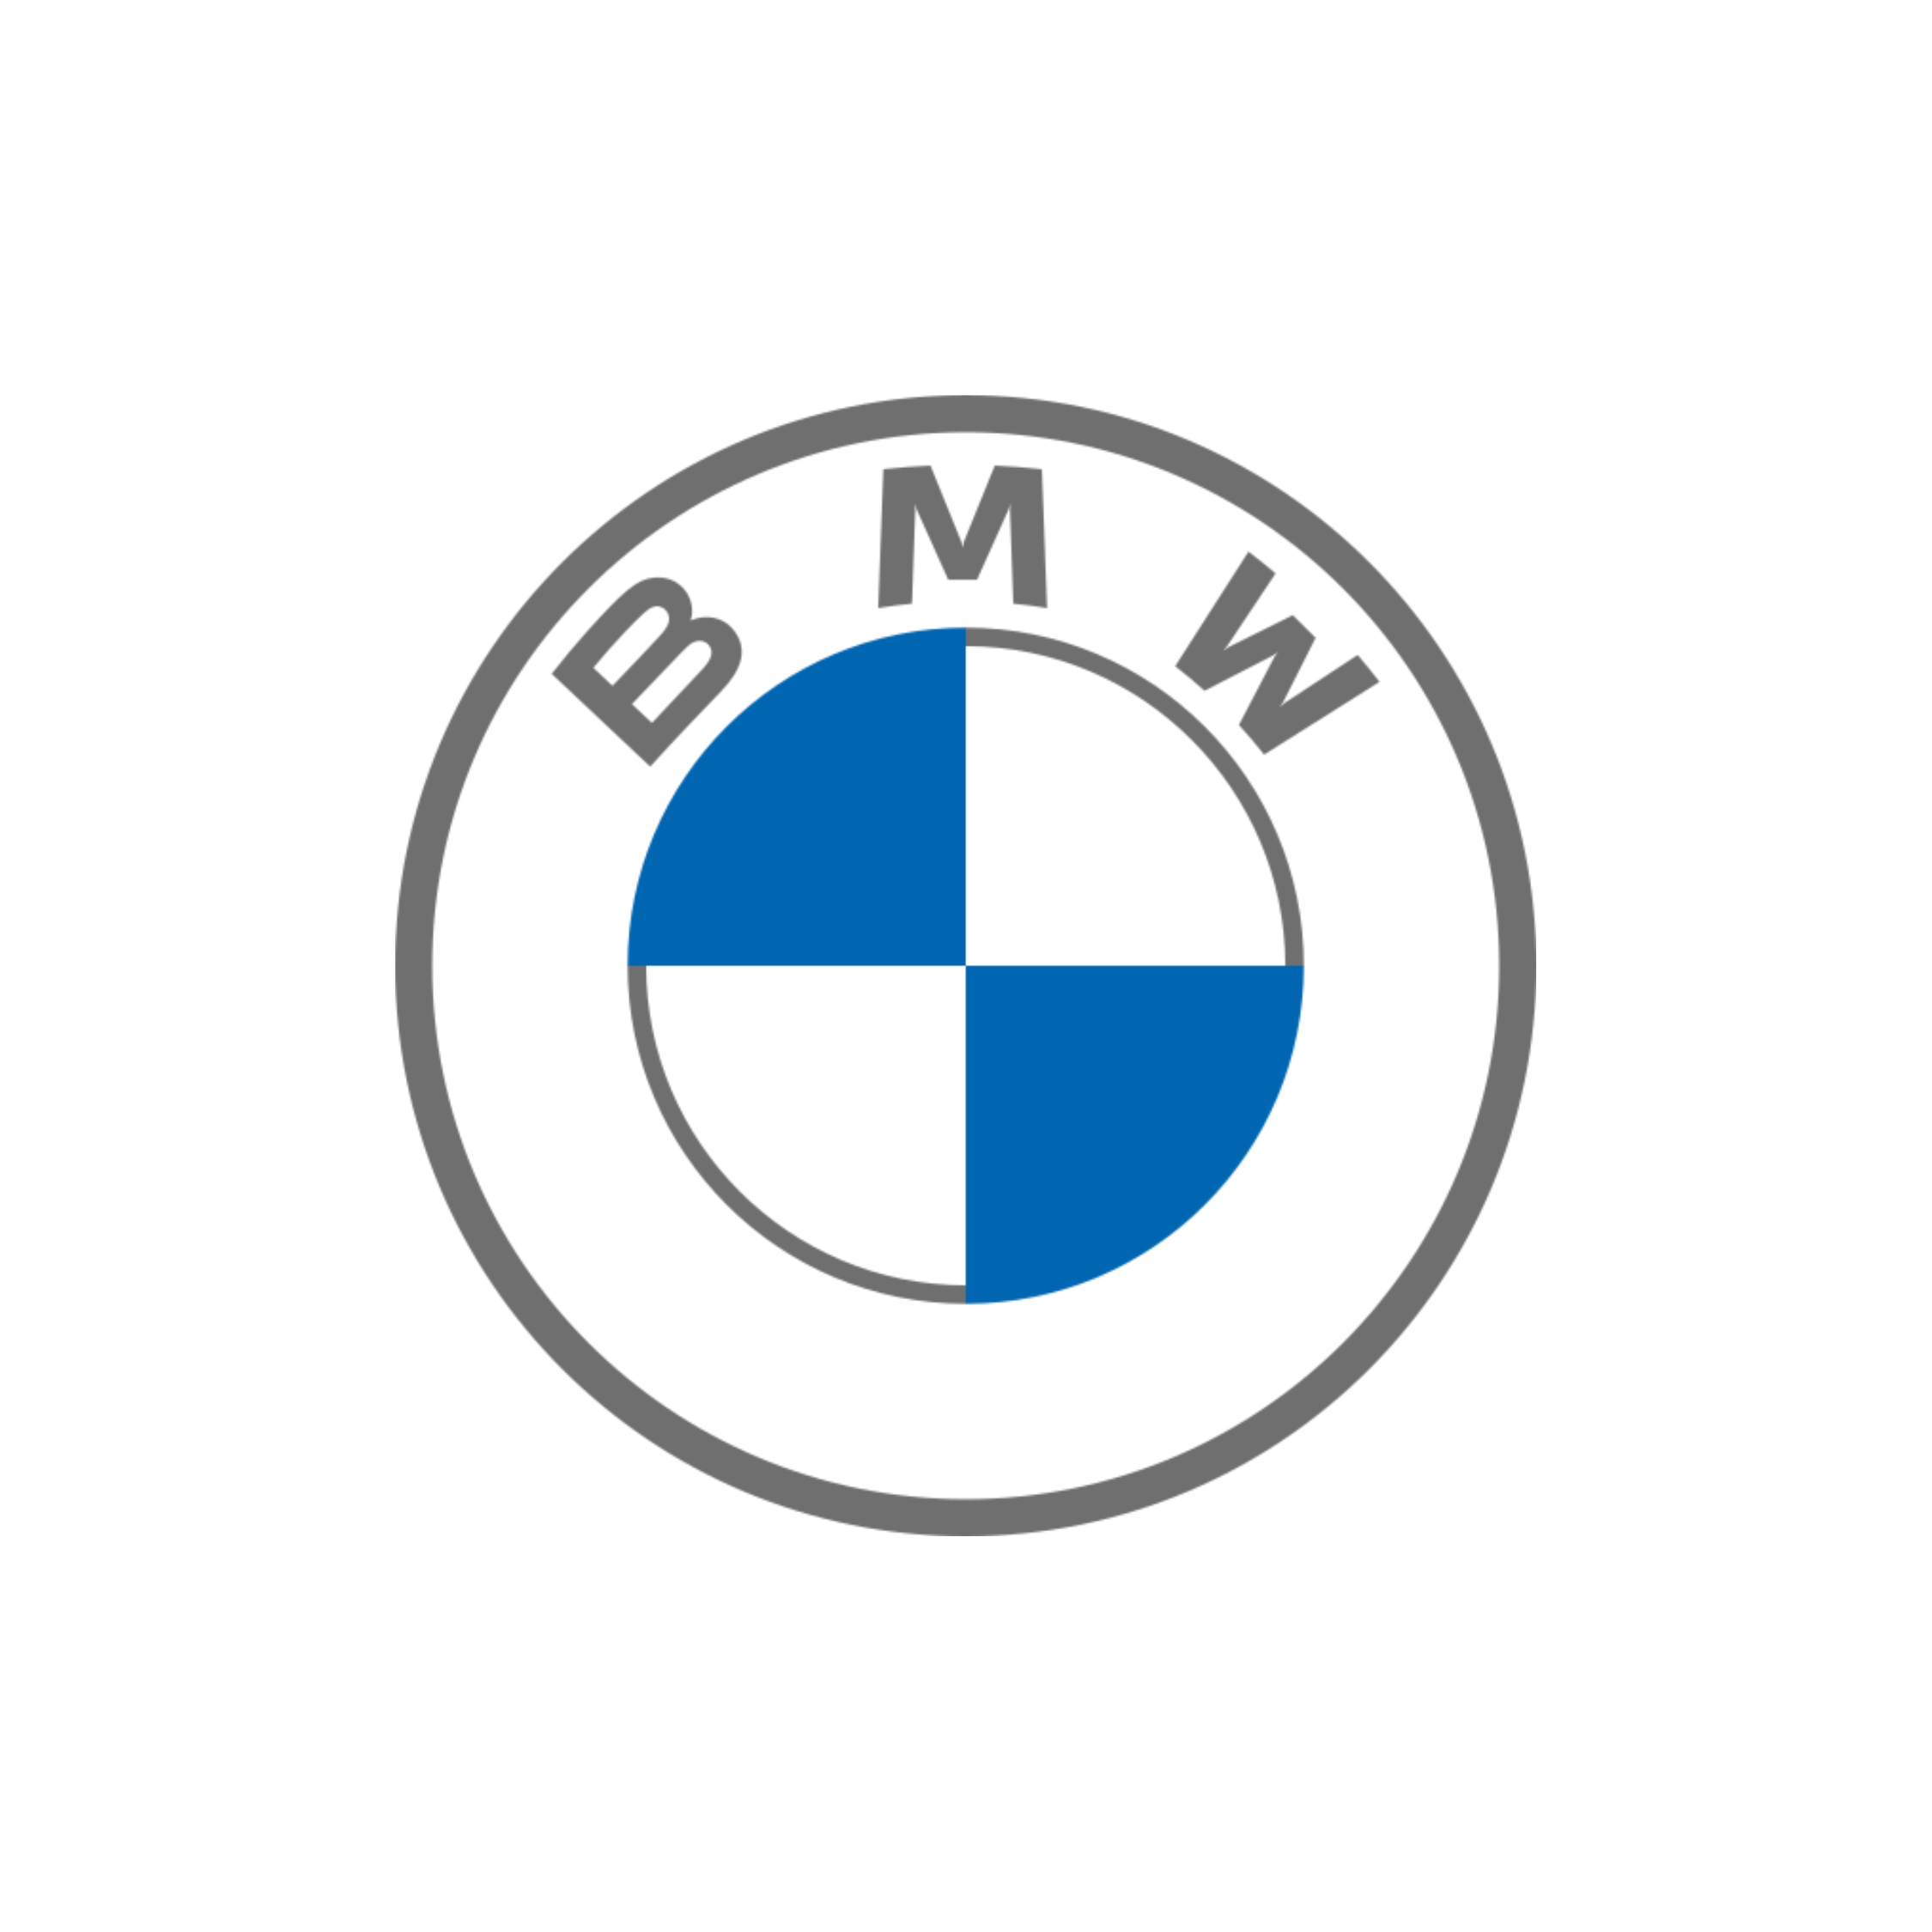 BMW 1er F-Serie F20/F21 – Mach 4 Parts